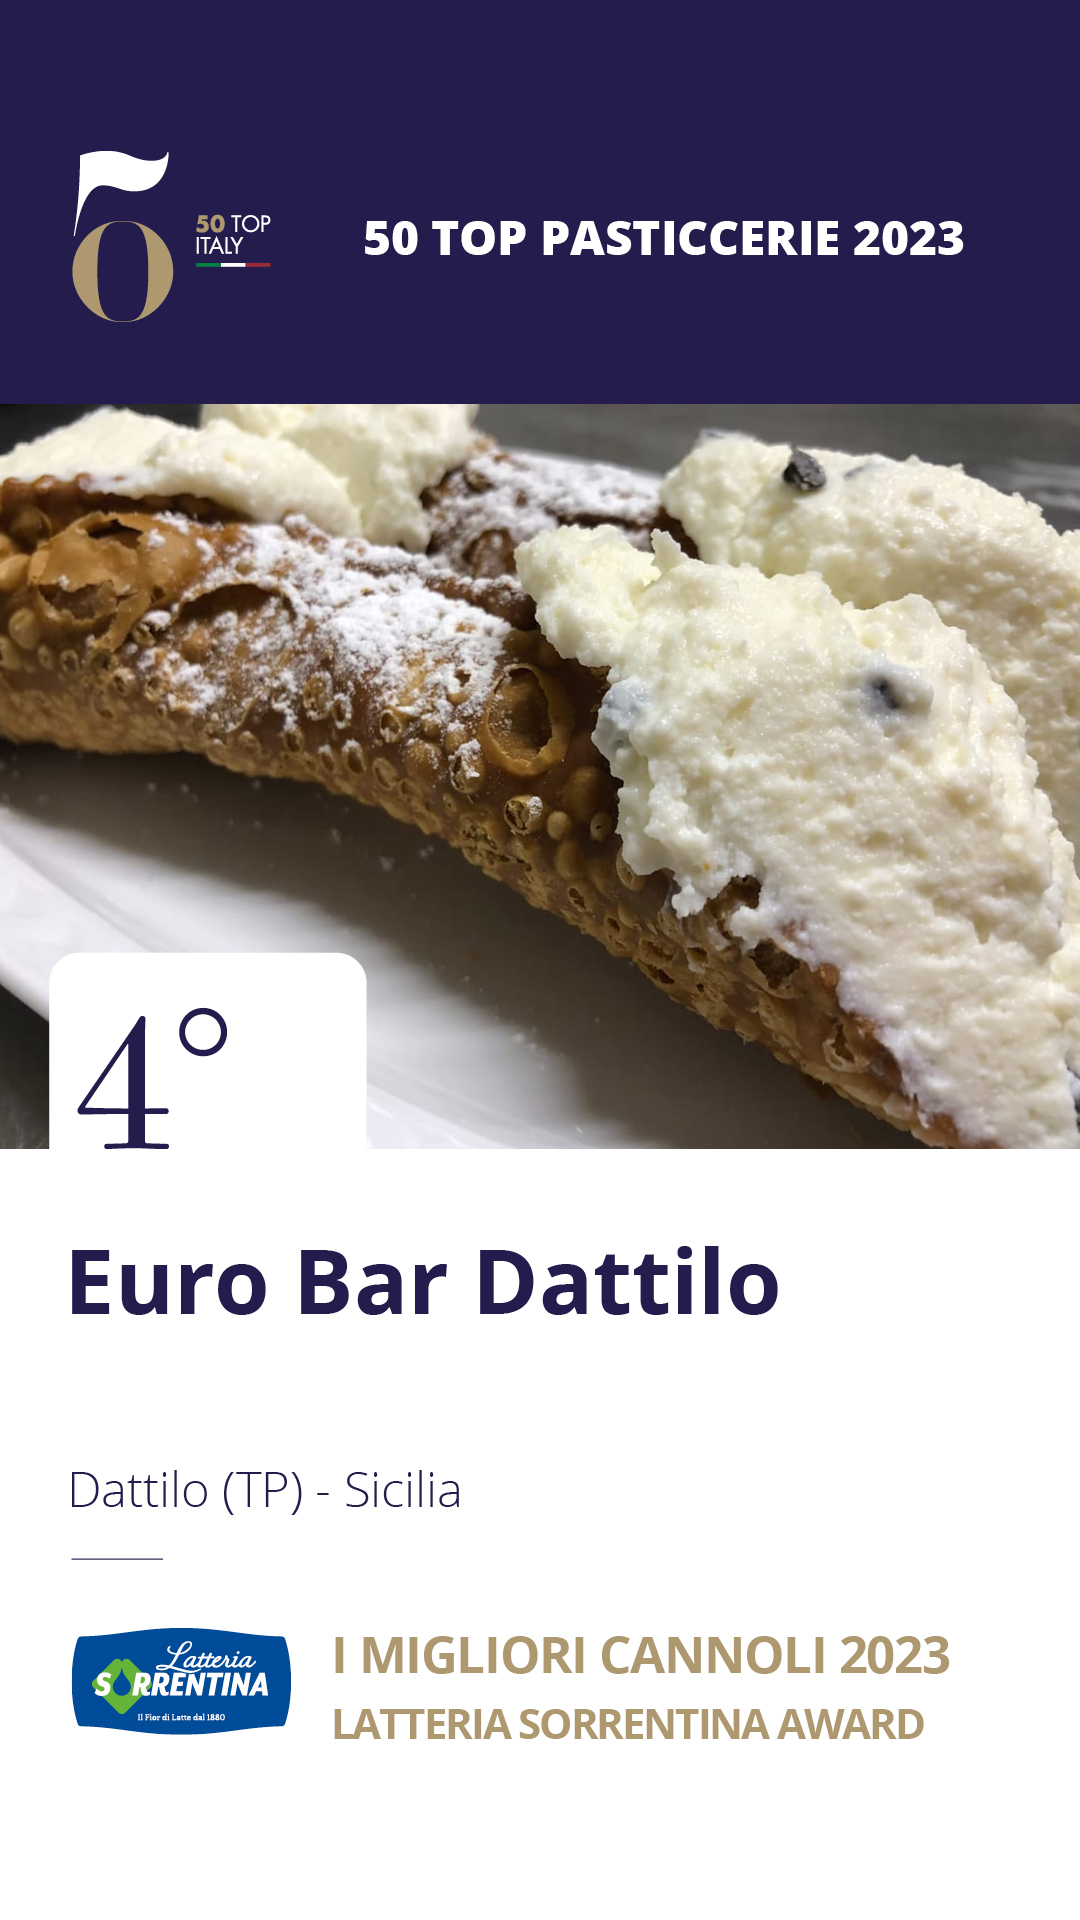 4 - Euro Bar Dattilo - Dattilo (TP), Sicilia